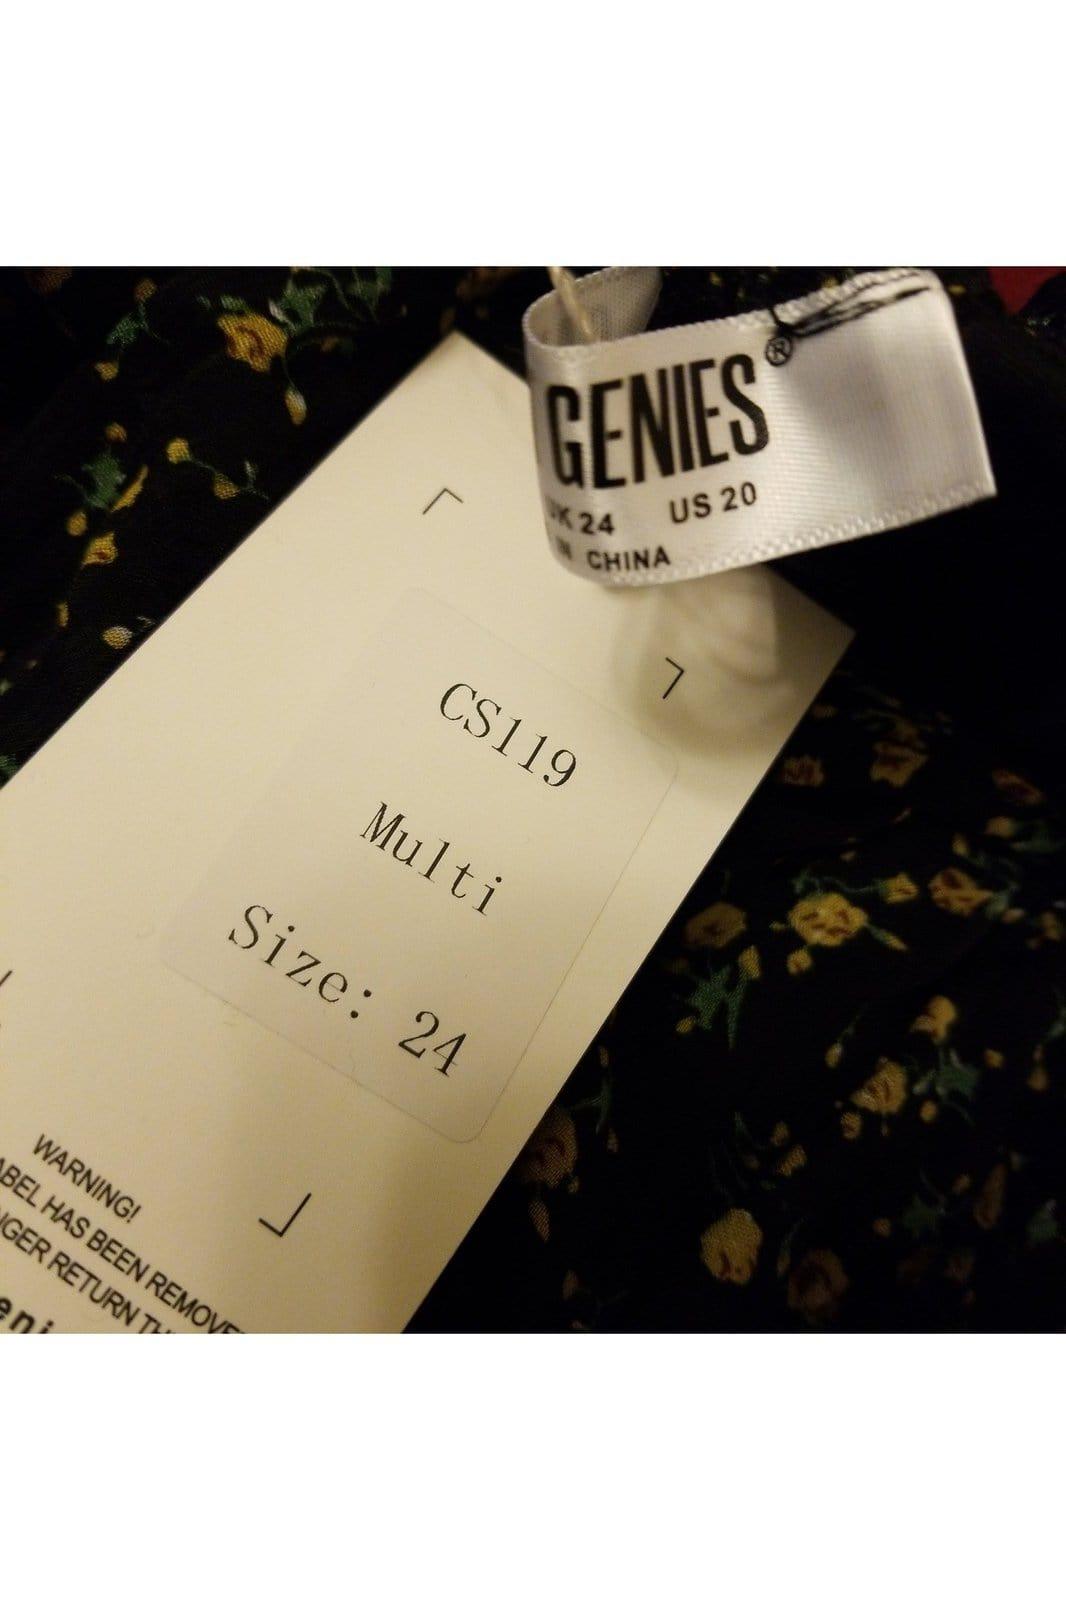 Saint Genies women's multi blouse size 20